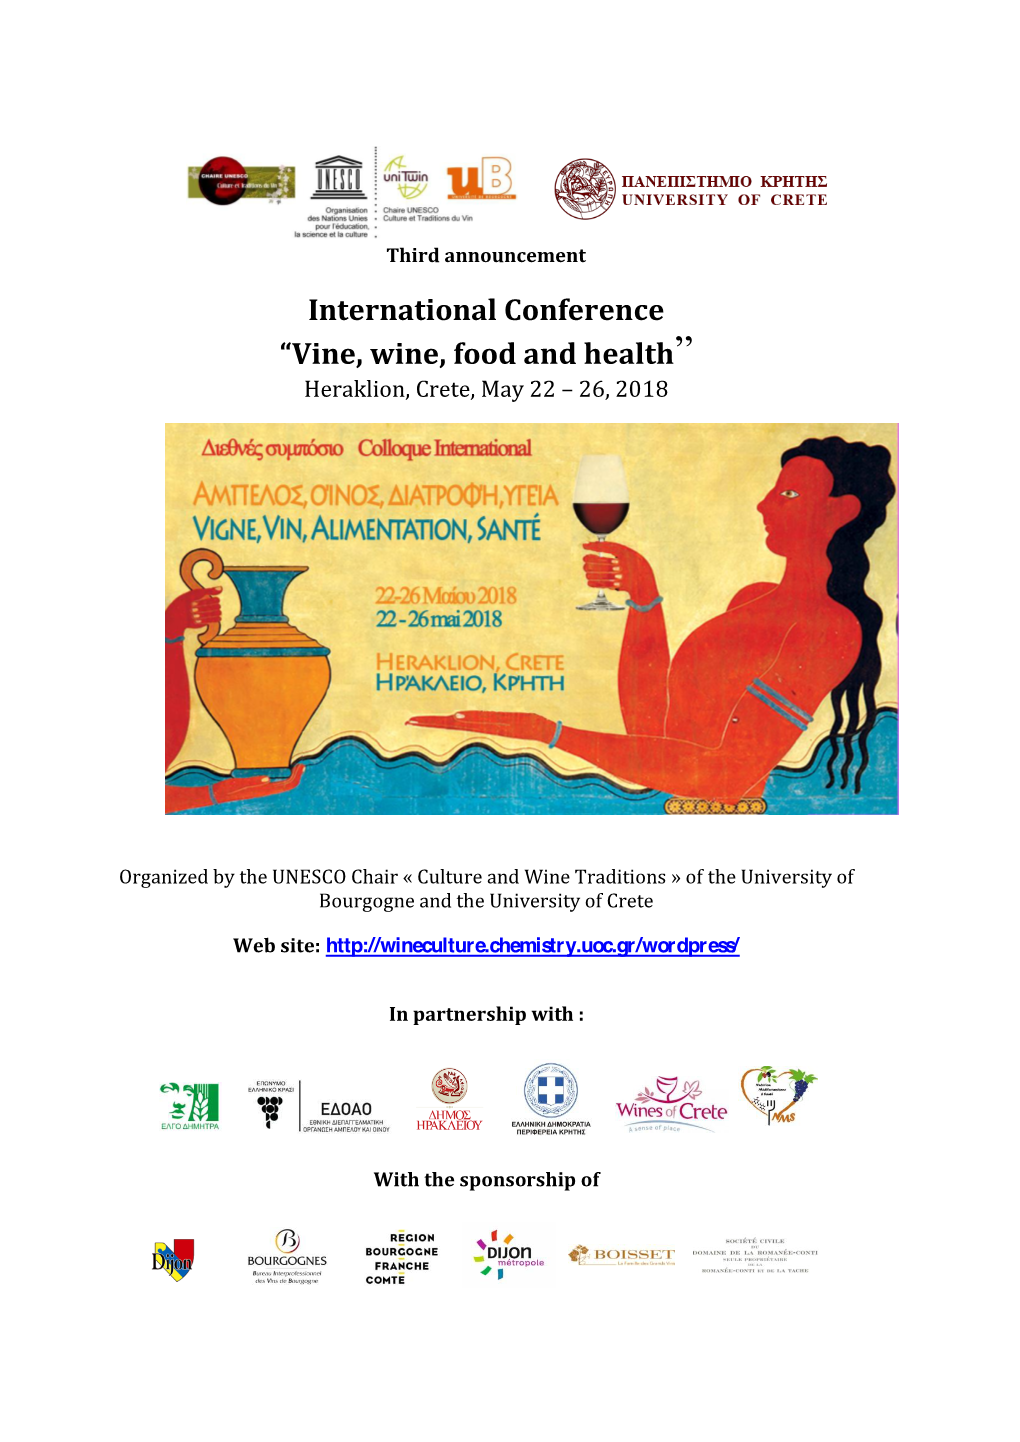 International Conference “Vine, Wine, Food and Health”